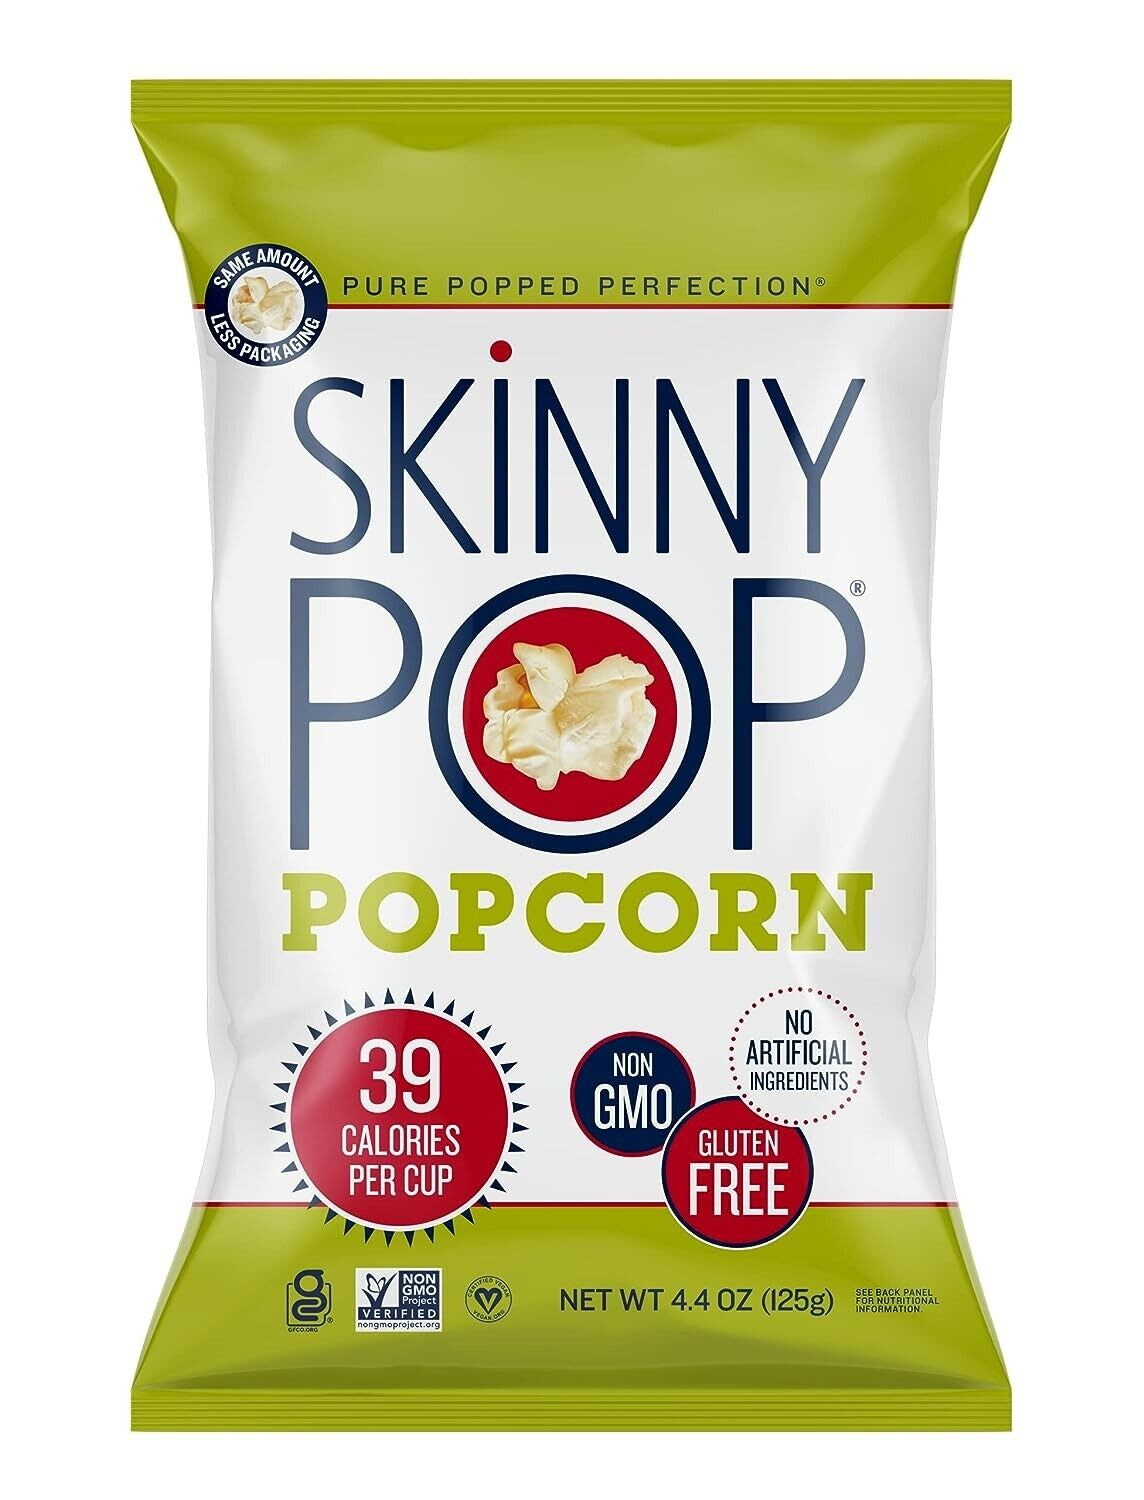 SkinnyPop Original Popcorn, 4.4oz Grocery Size Bags, Skinny Pop, Healthy Popcorn - Picture 1 of 5